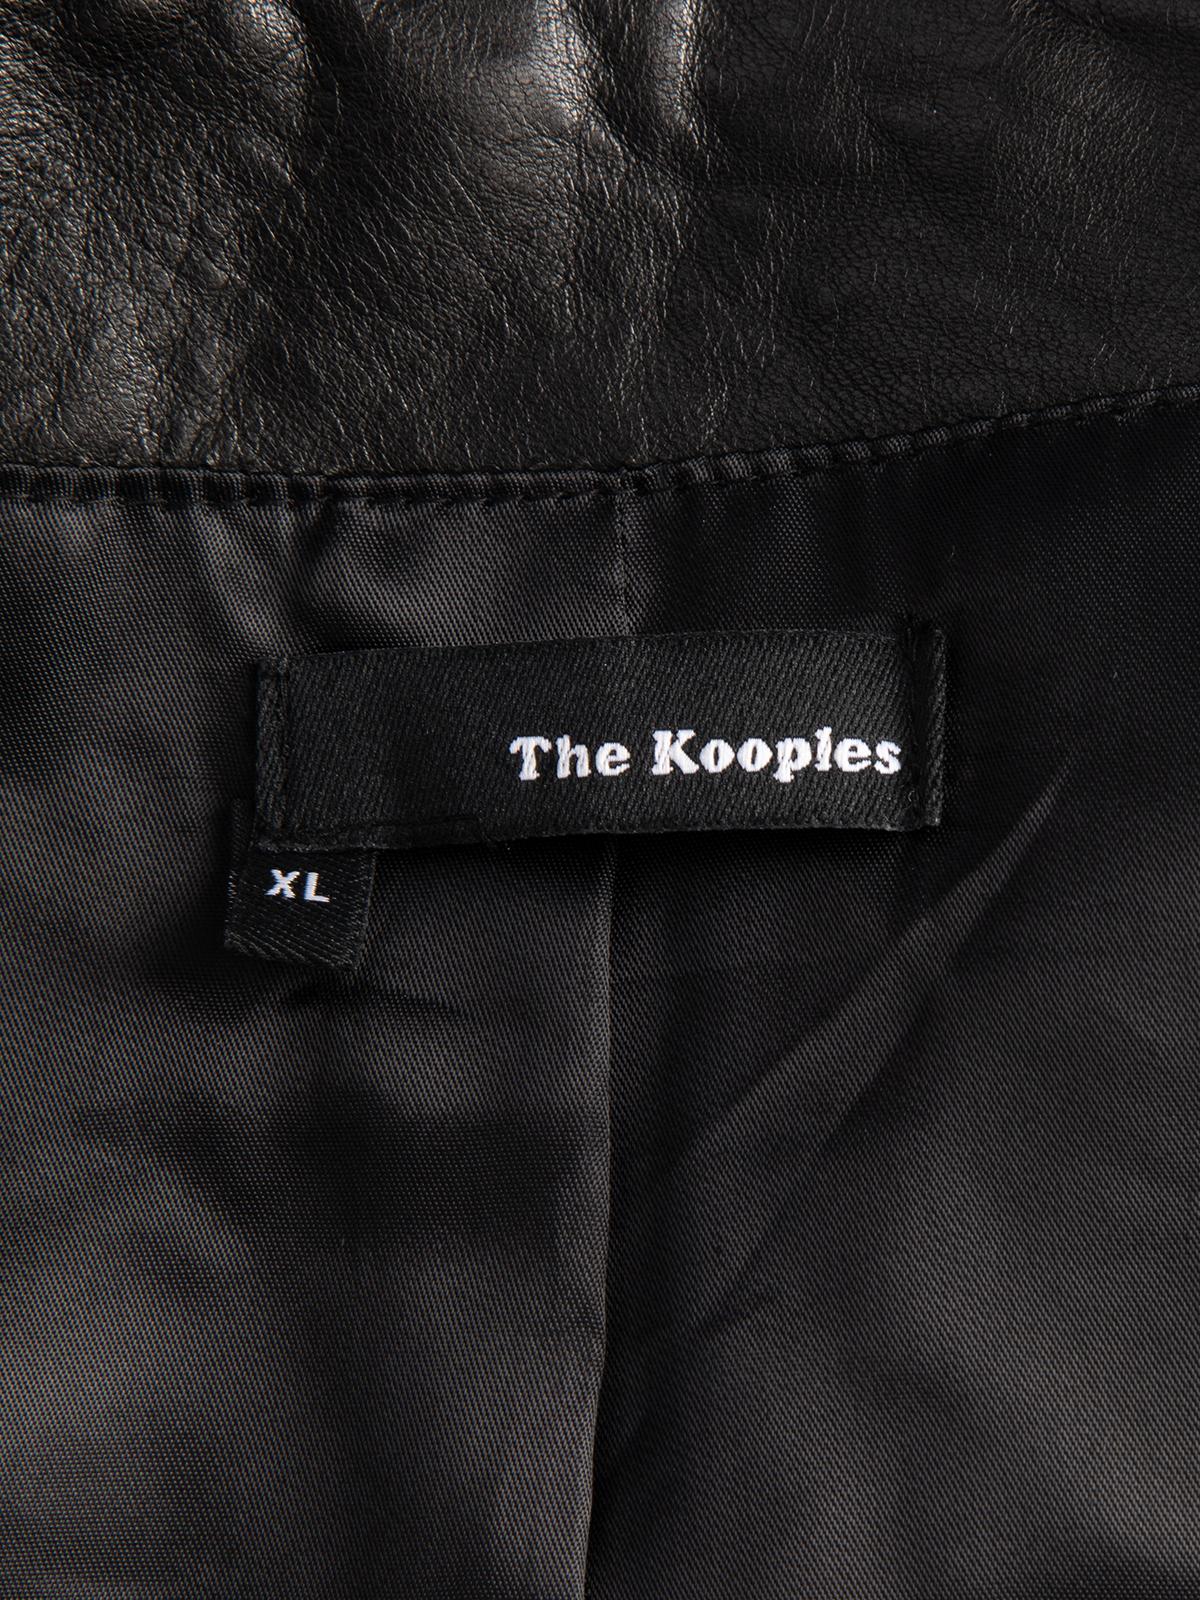 Pre-Loved The Kooples Women's Black Leather Quilted Biker Jacket 2